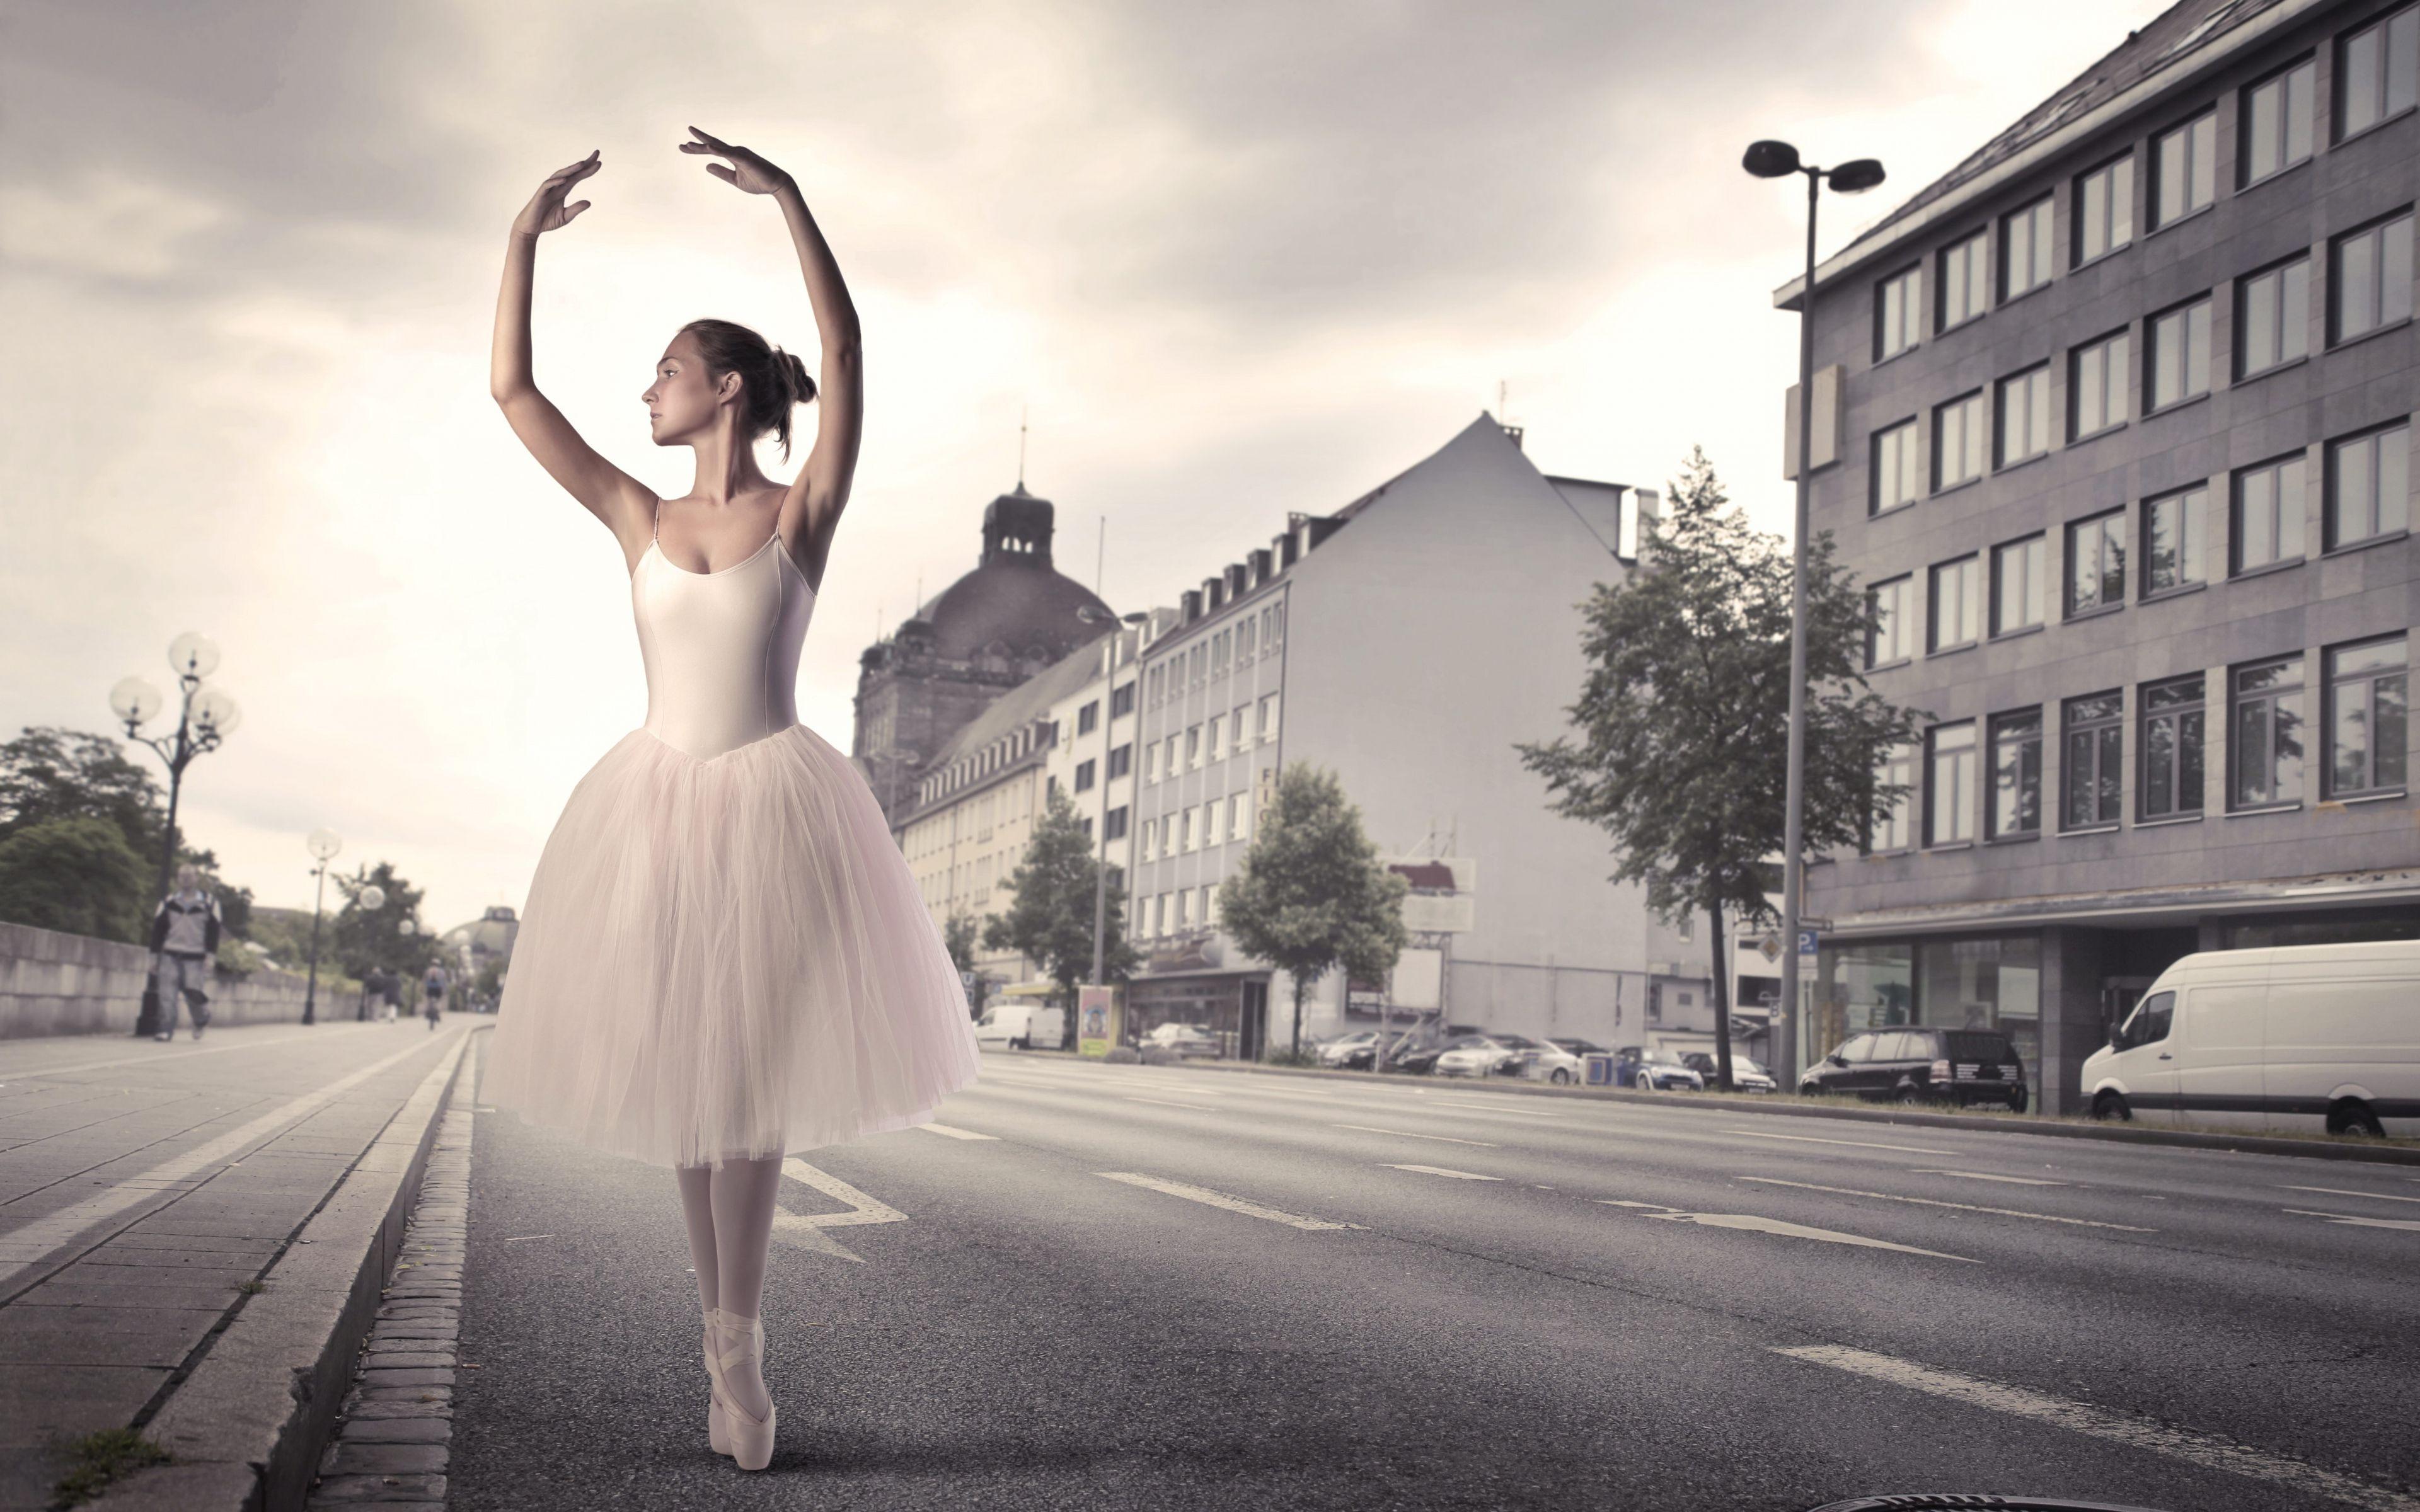 Ballerina dancing in the street wallpaper and image